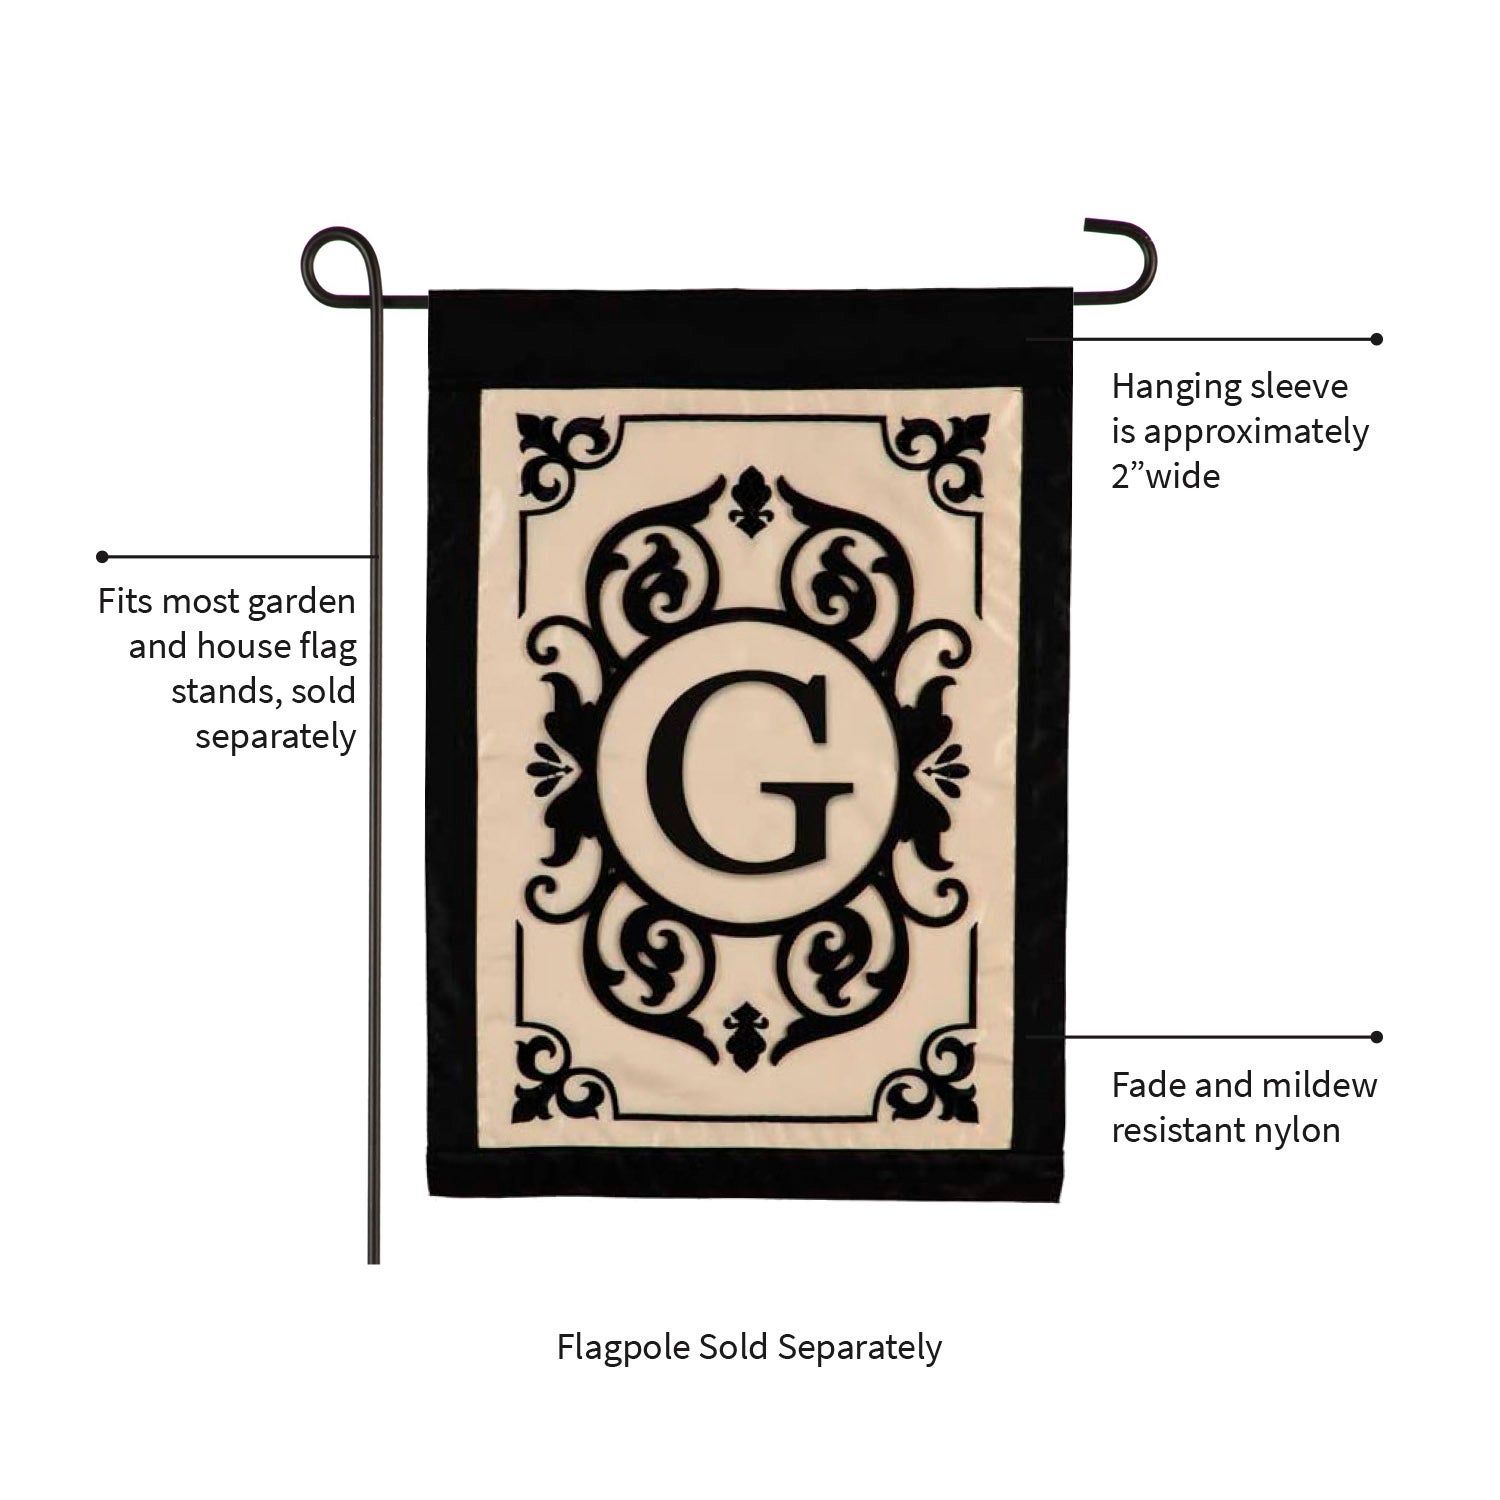 Cambridge Monogram Applique Garden Flag, Letter G